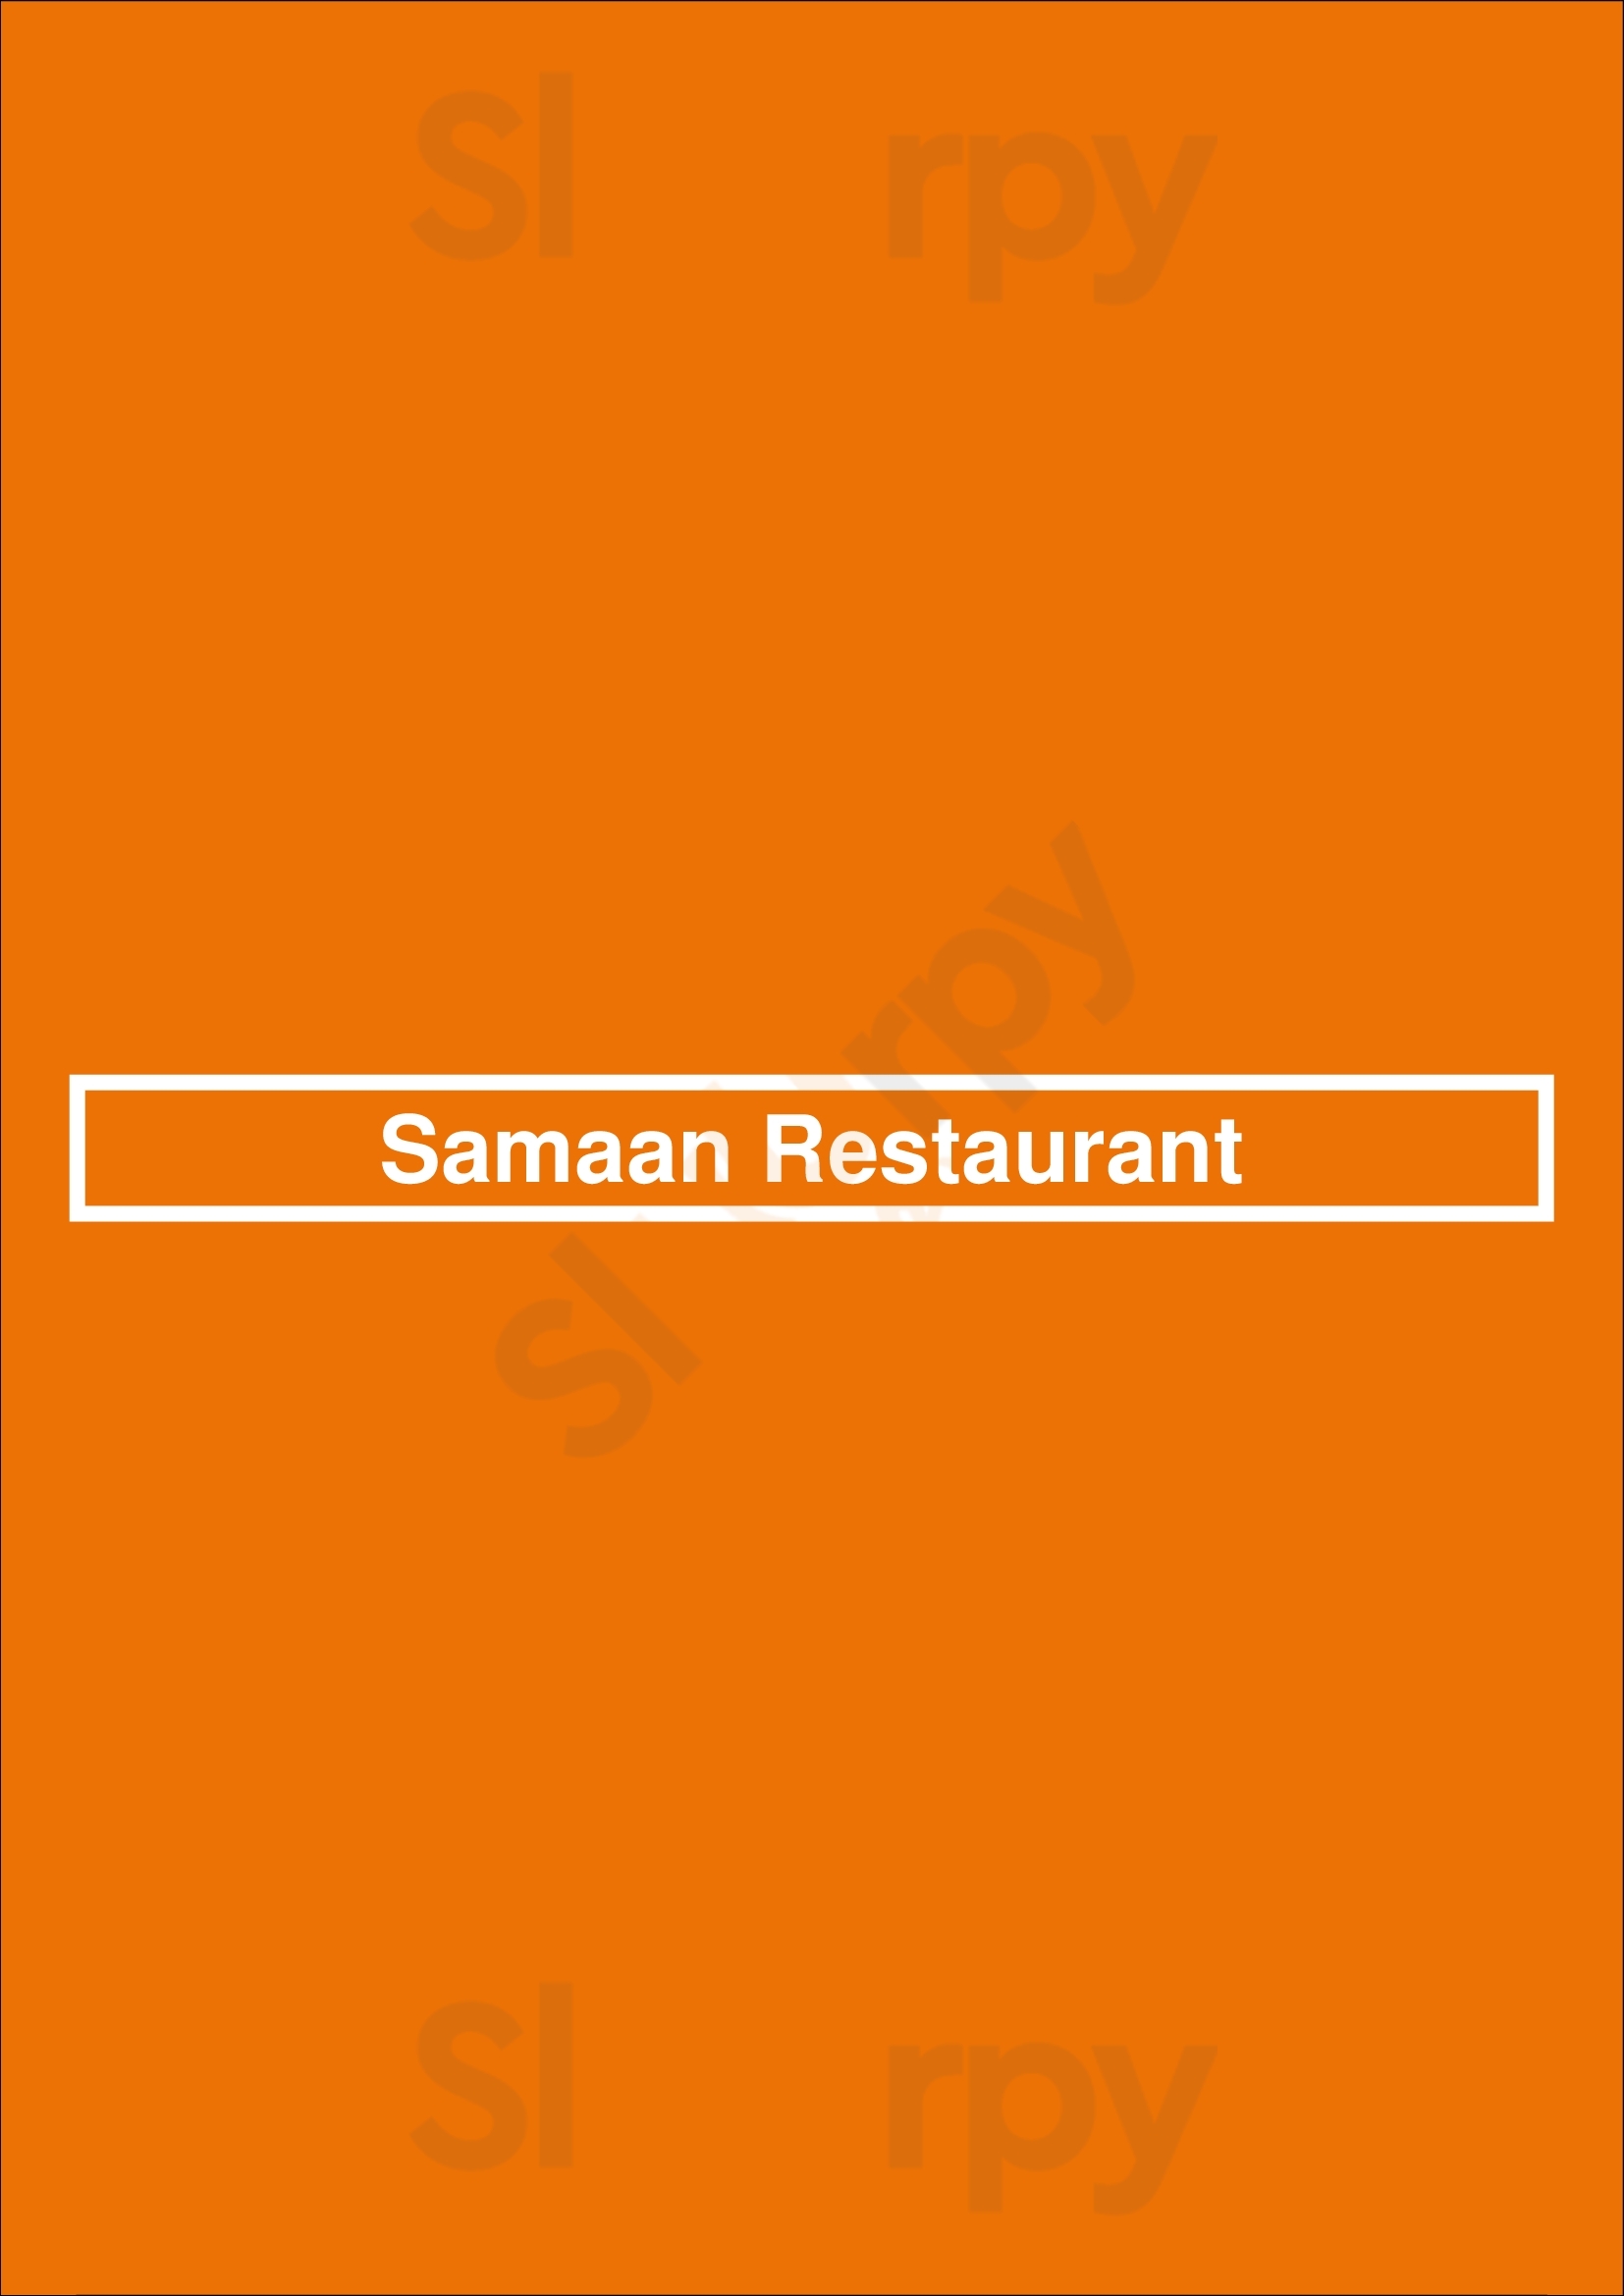 Samaan Restaurant Cambridge Menu - 1